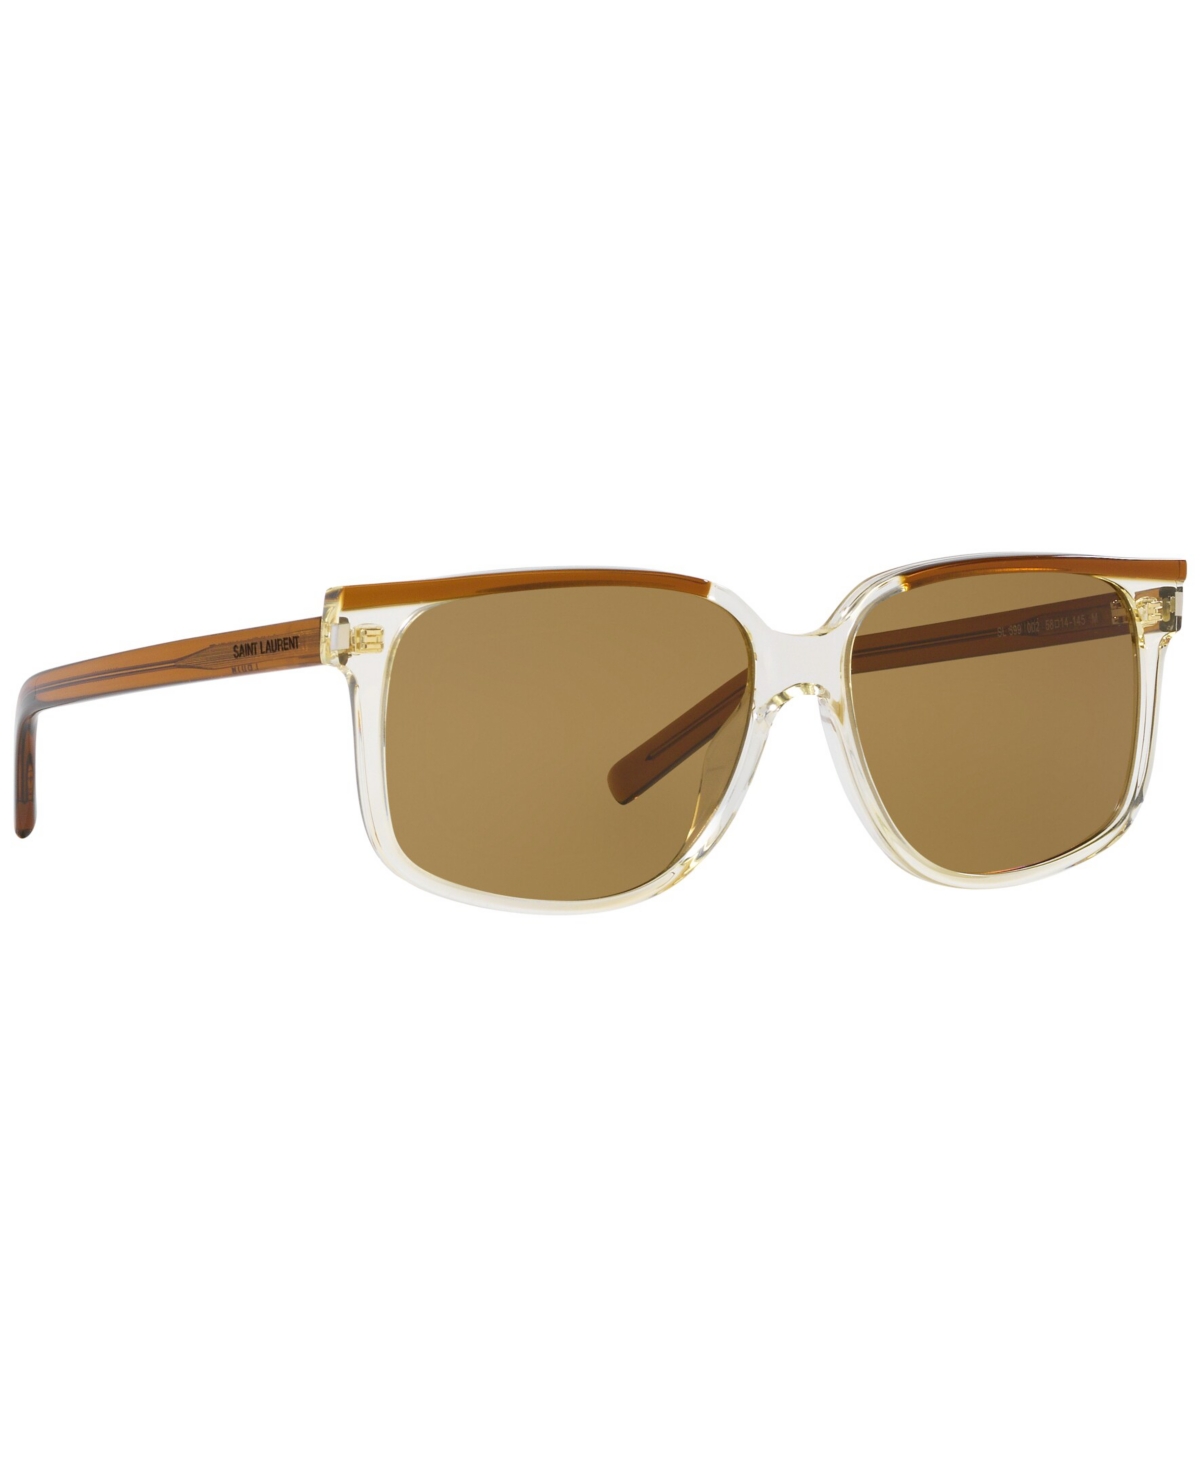 Saint Laurent Men's Sunglasses, Sl 599 In Brown